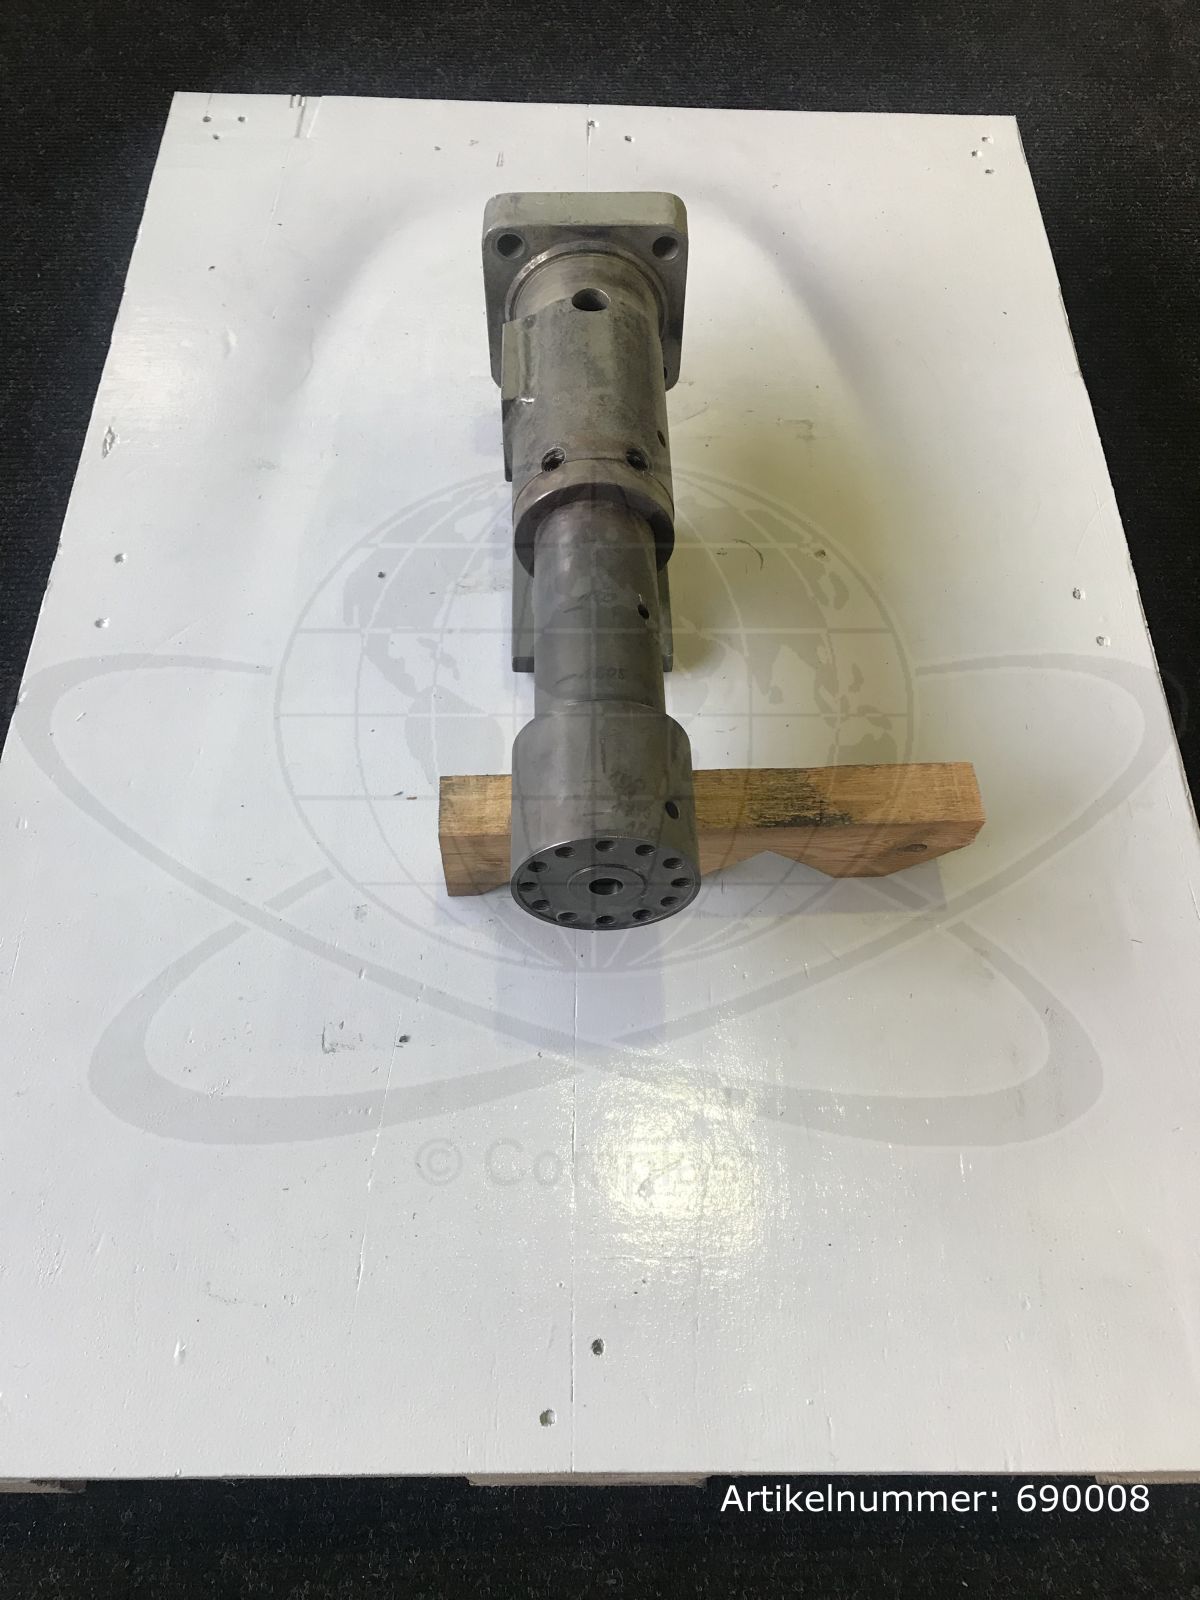 Ferromatik Milacron Plastifizierzylinder IU90, Ø 18 mm